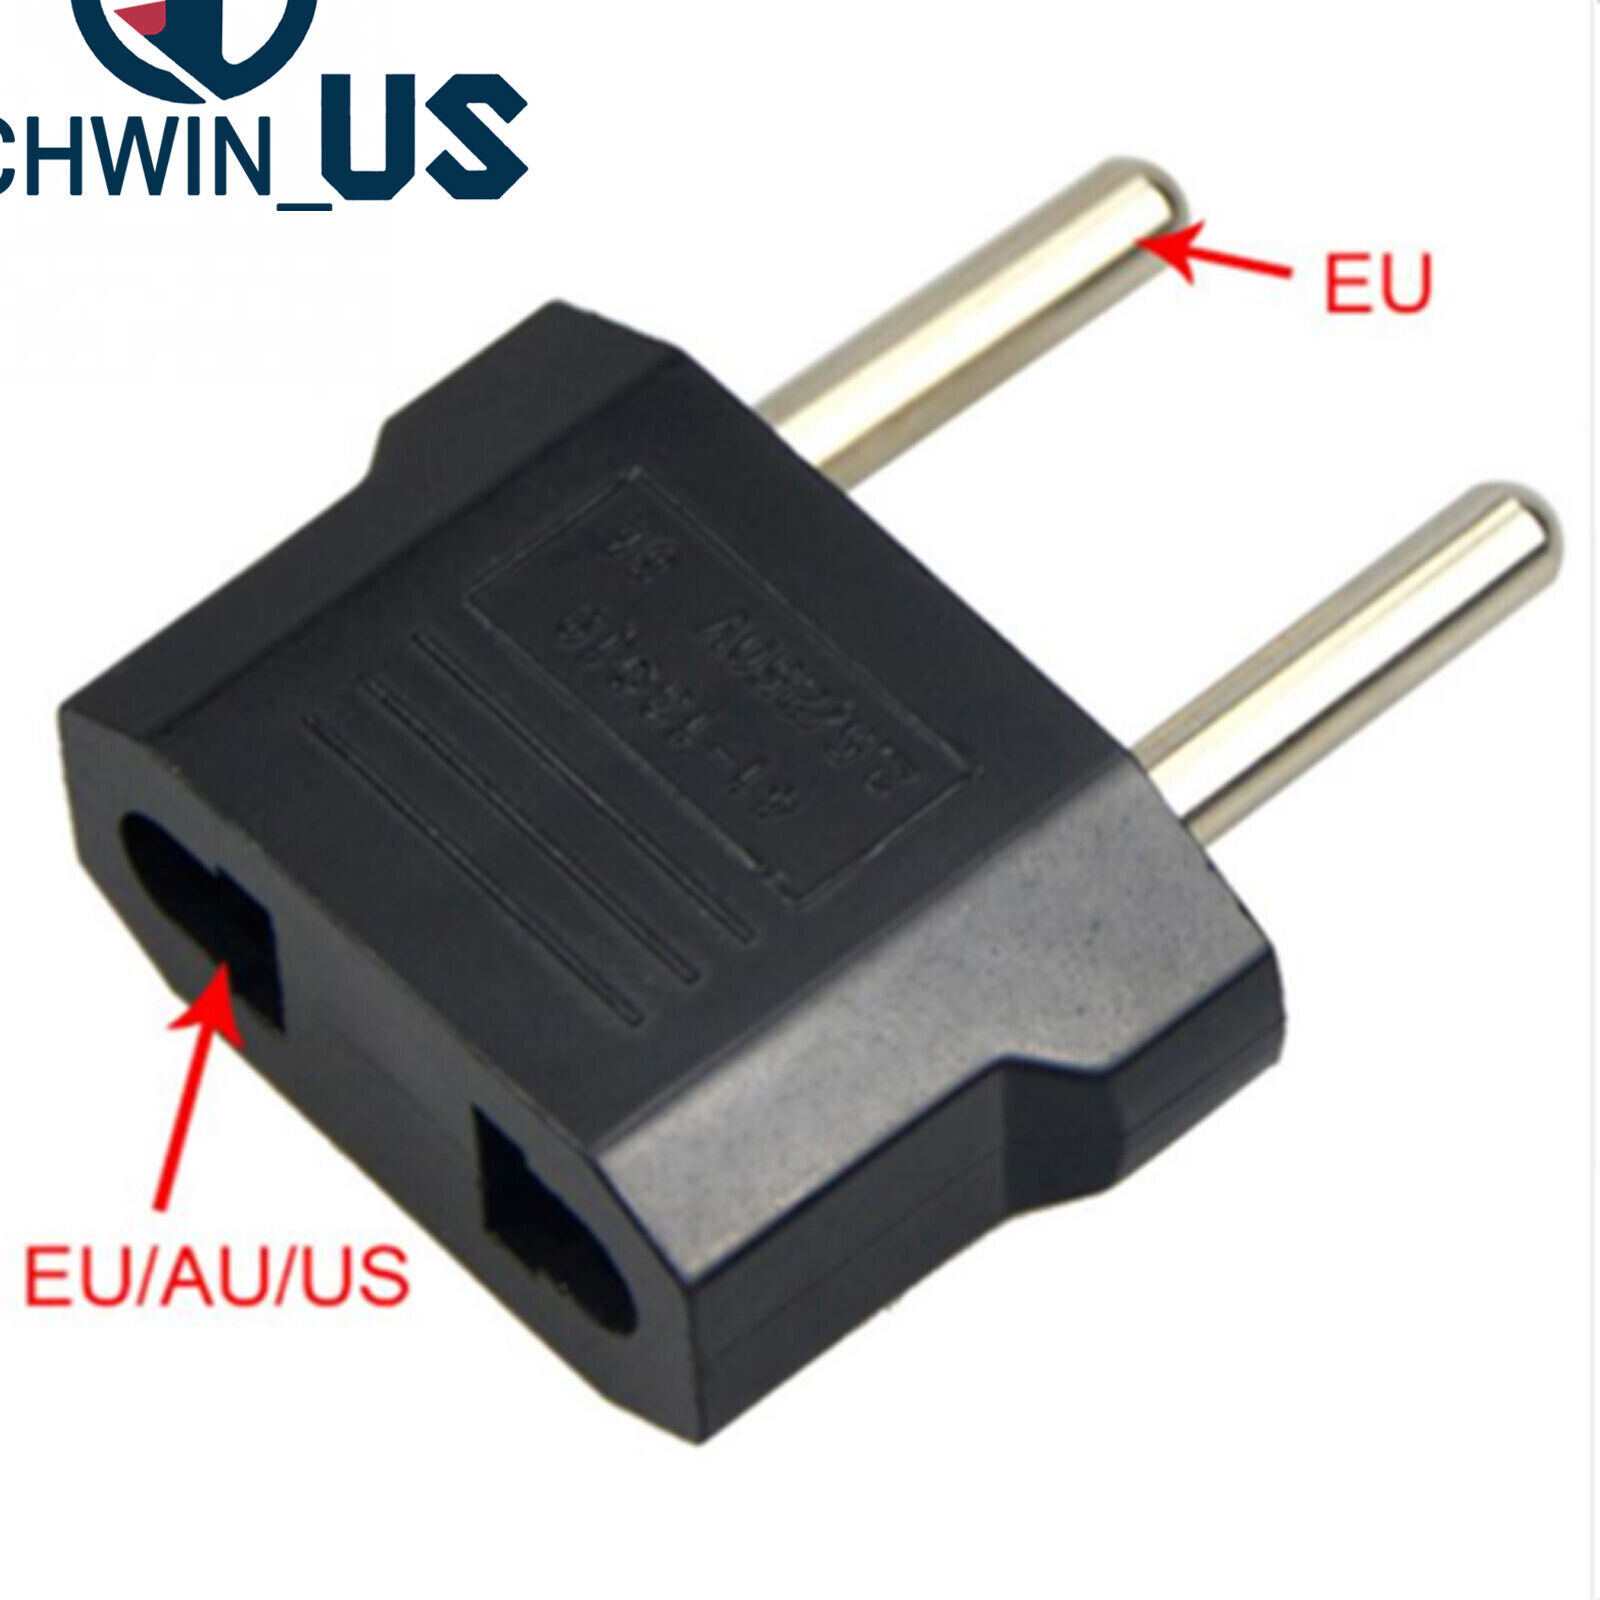 5PCS US/USA to European Euro EU Travel Charger Adapter Plug Outlet Converter